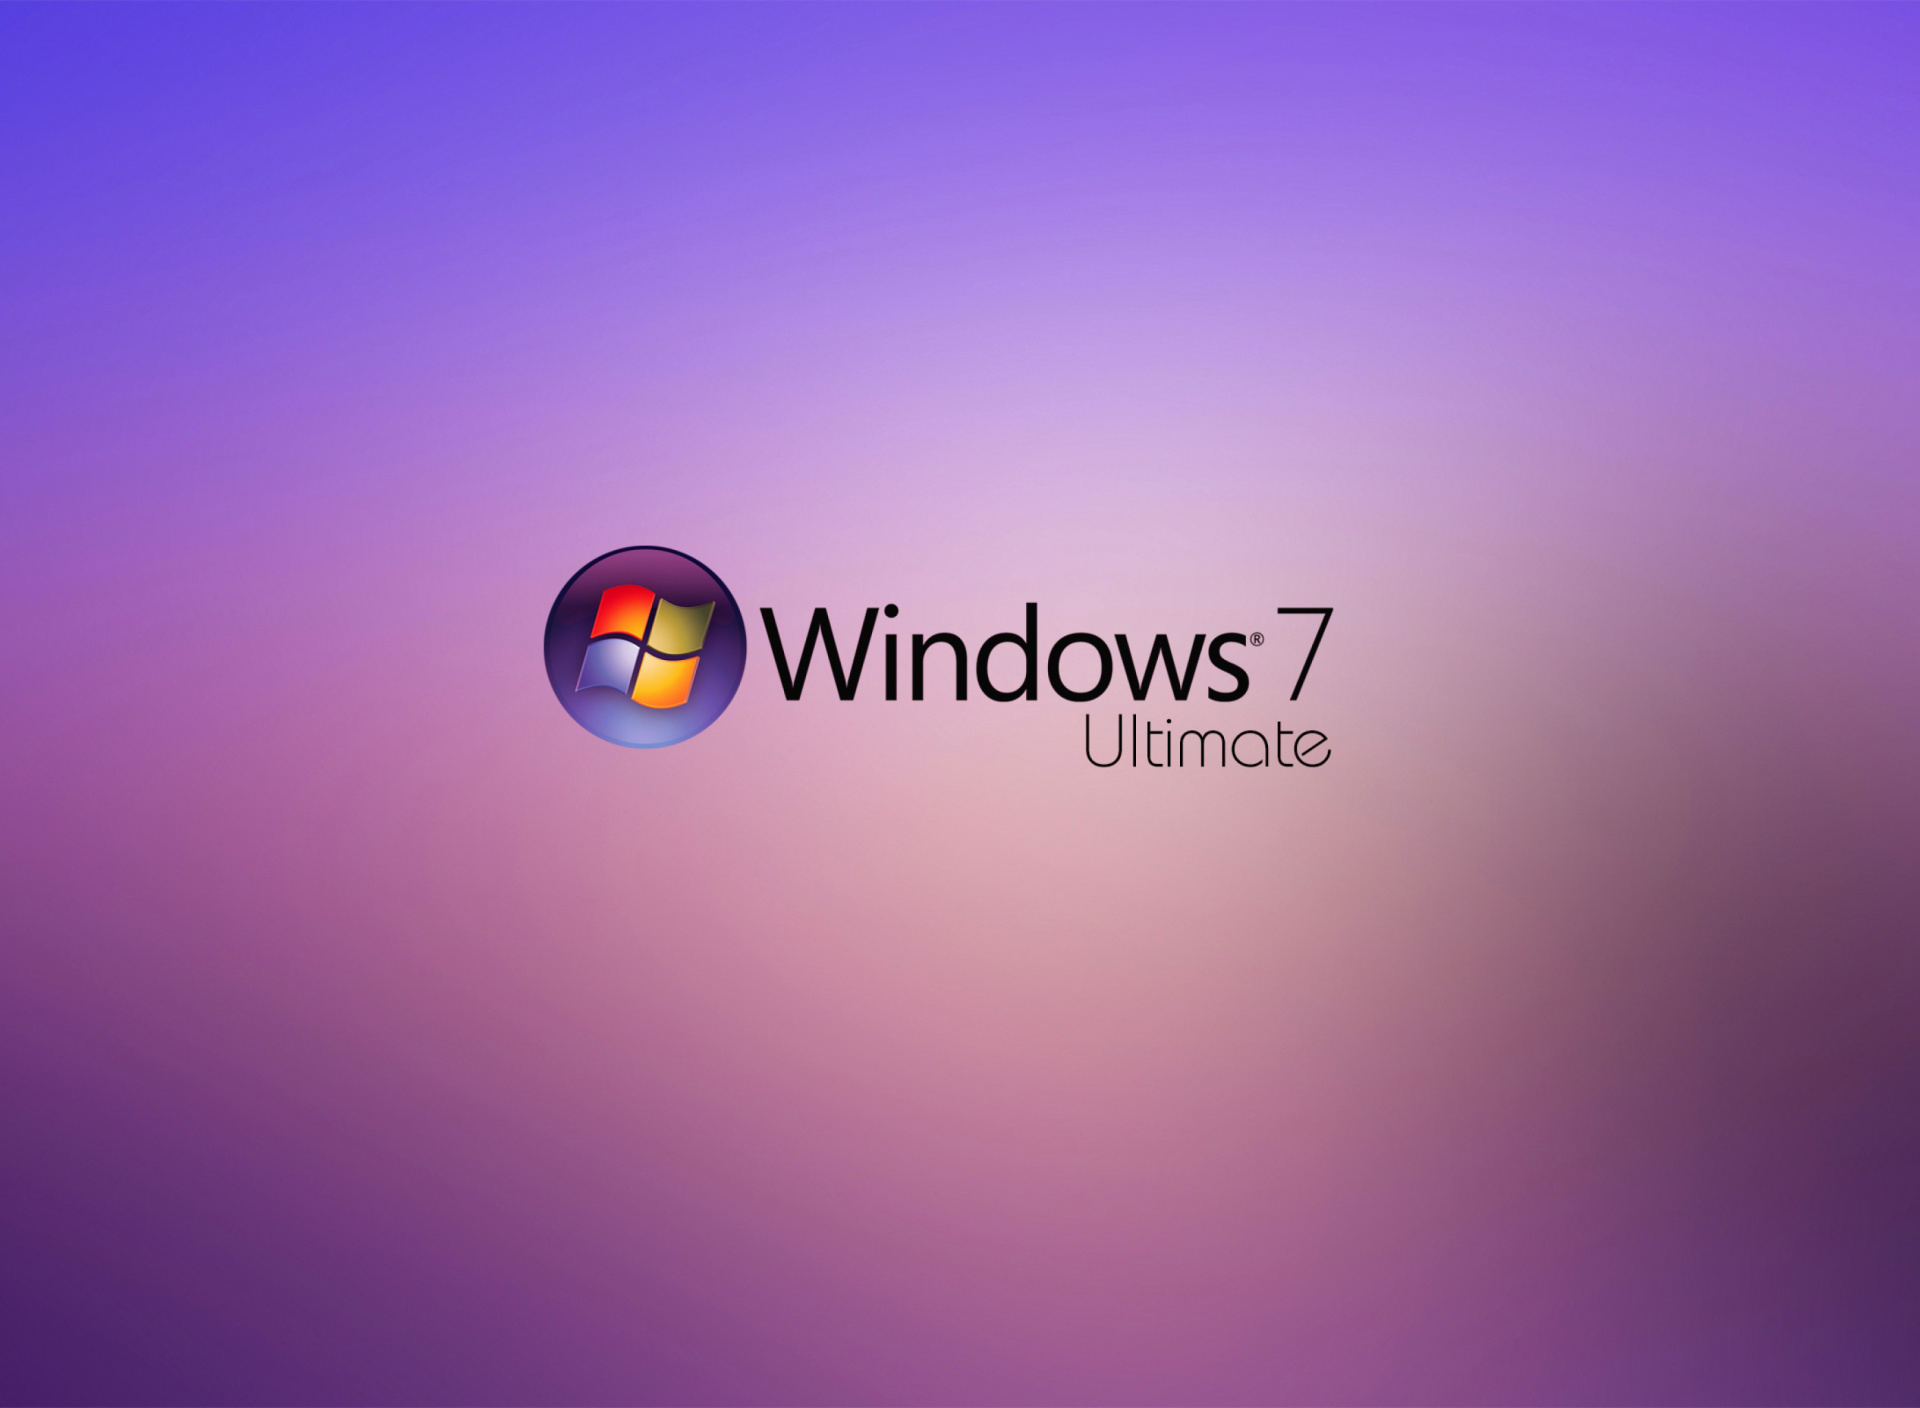 Windows 7 Ultimate wallpaper 1920x1408